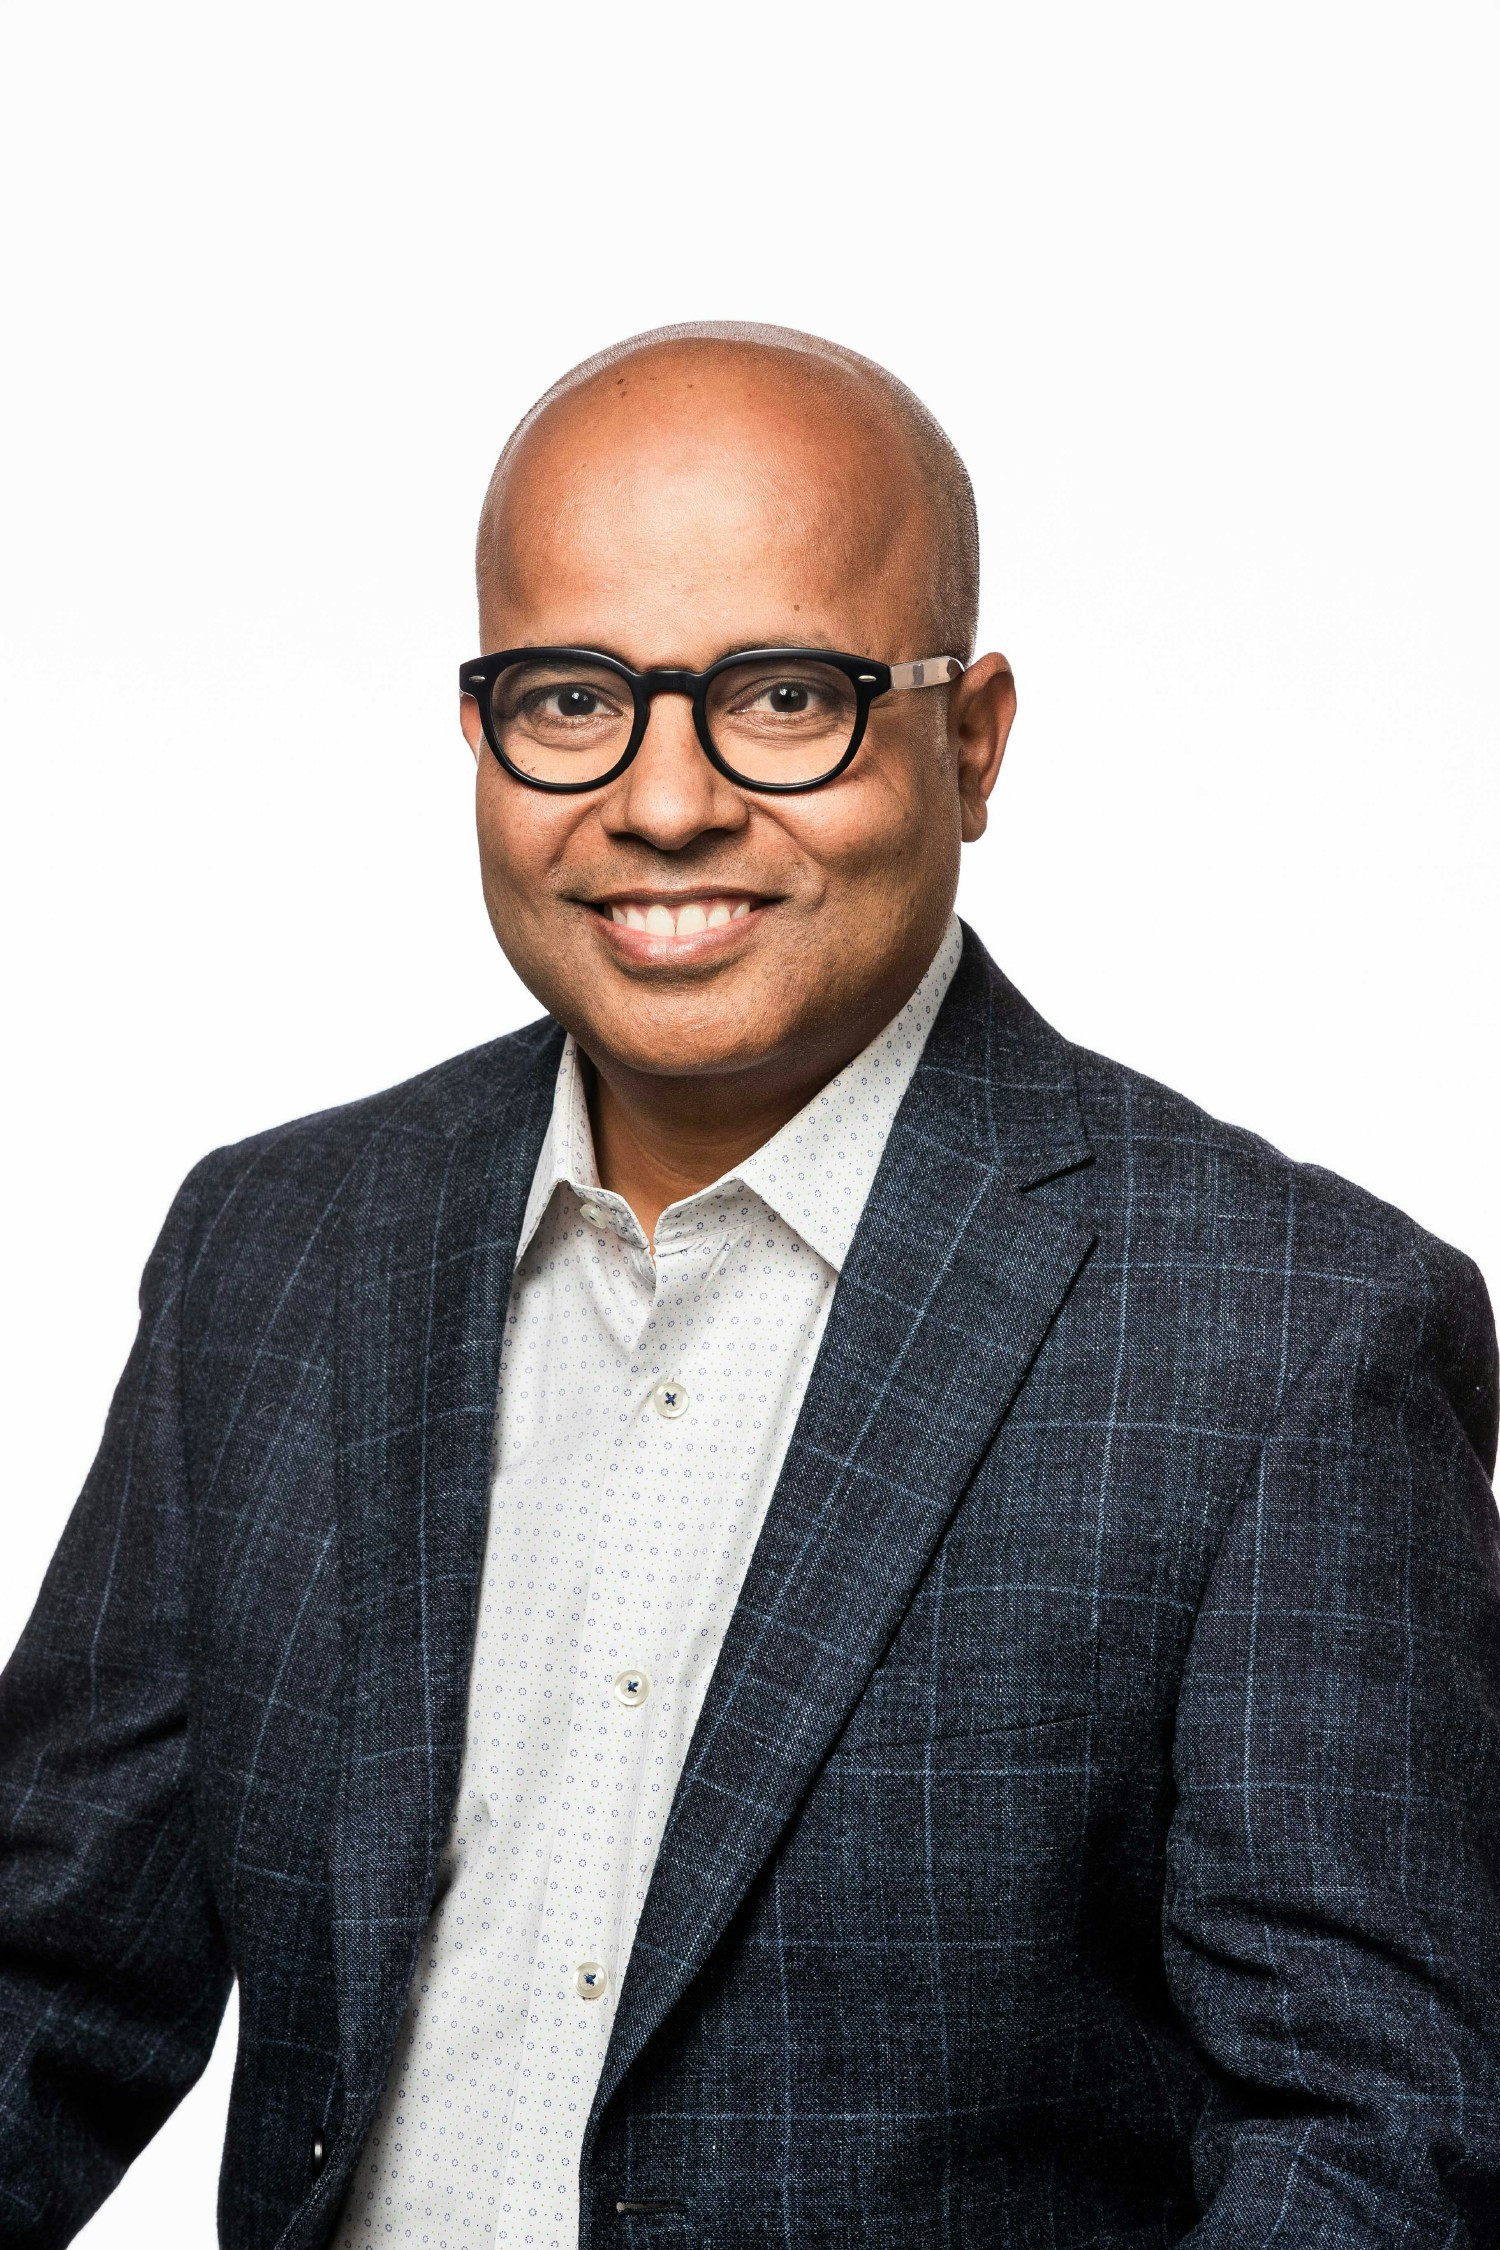 Rubrik CEO, Bipul Sinha 